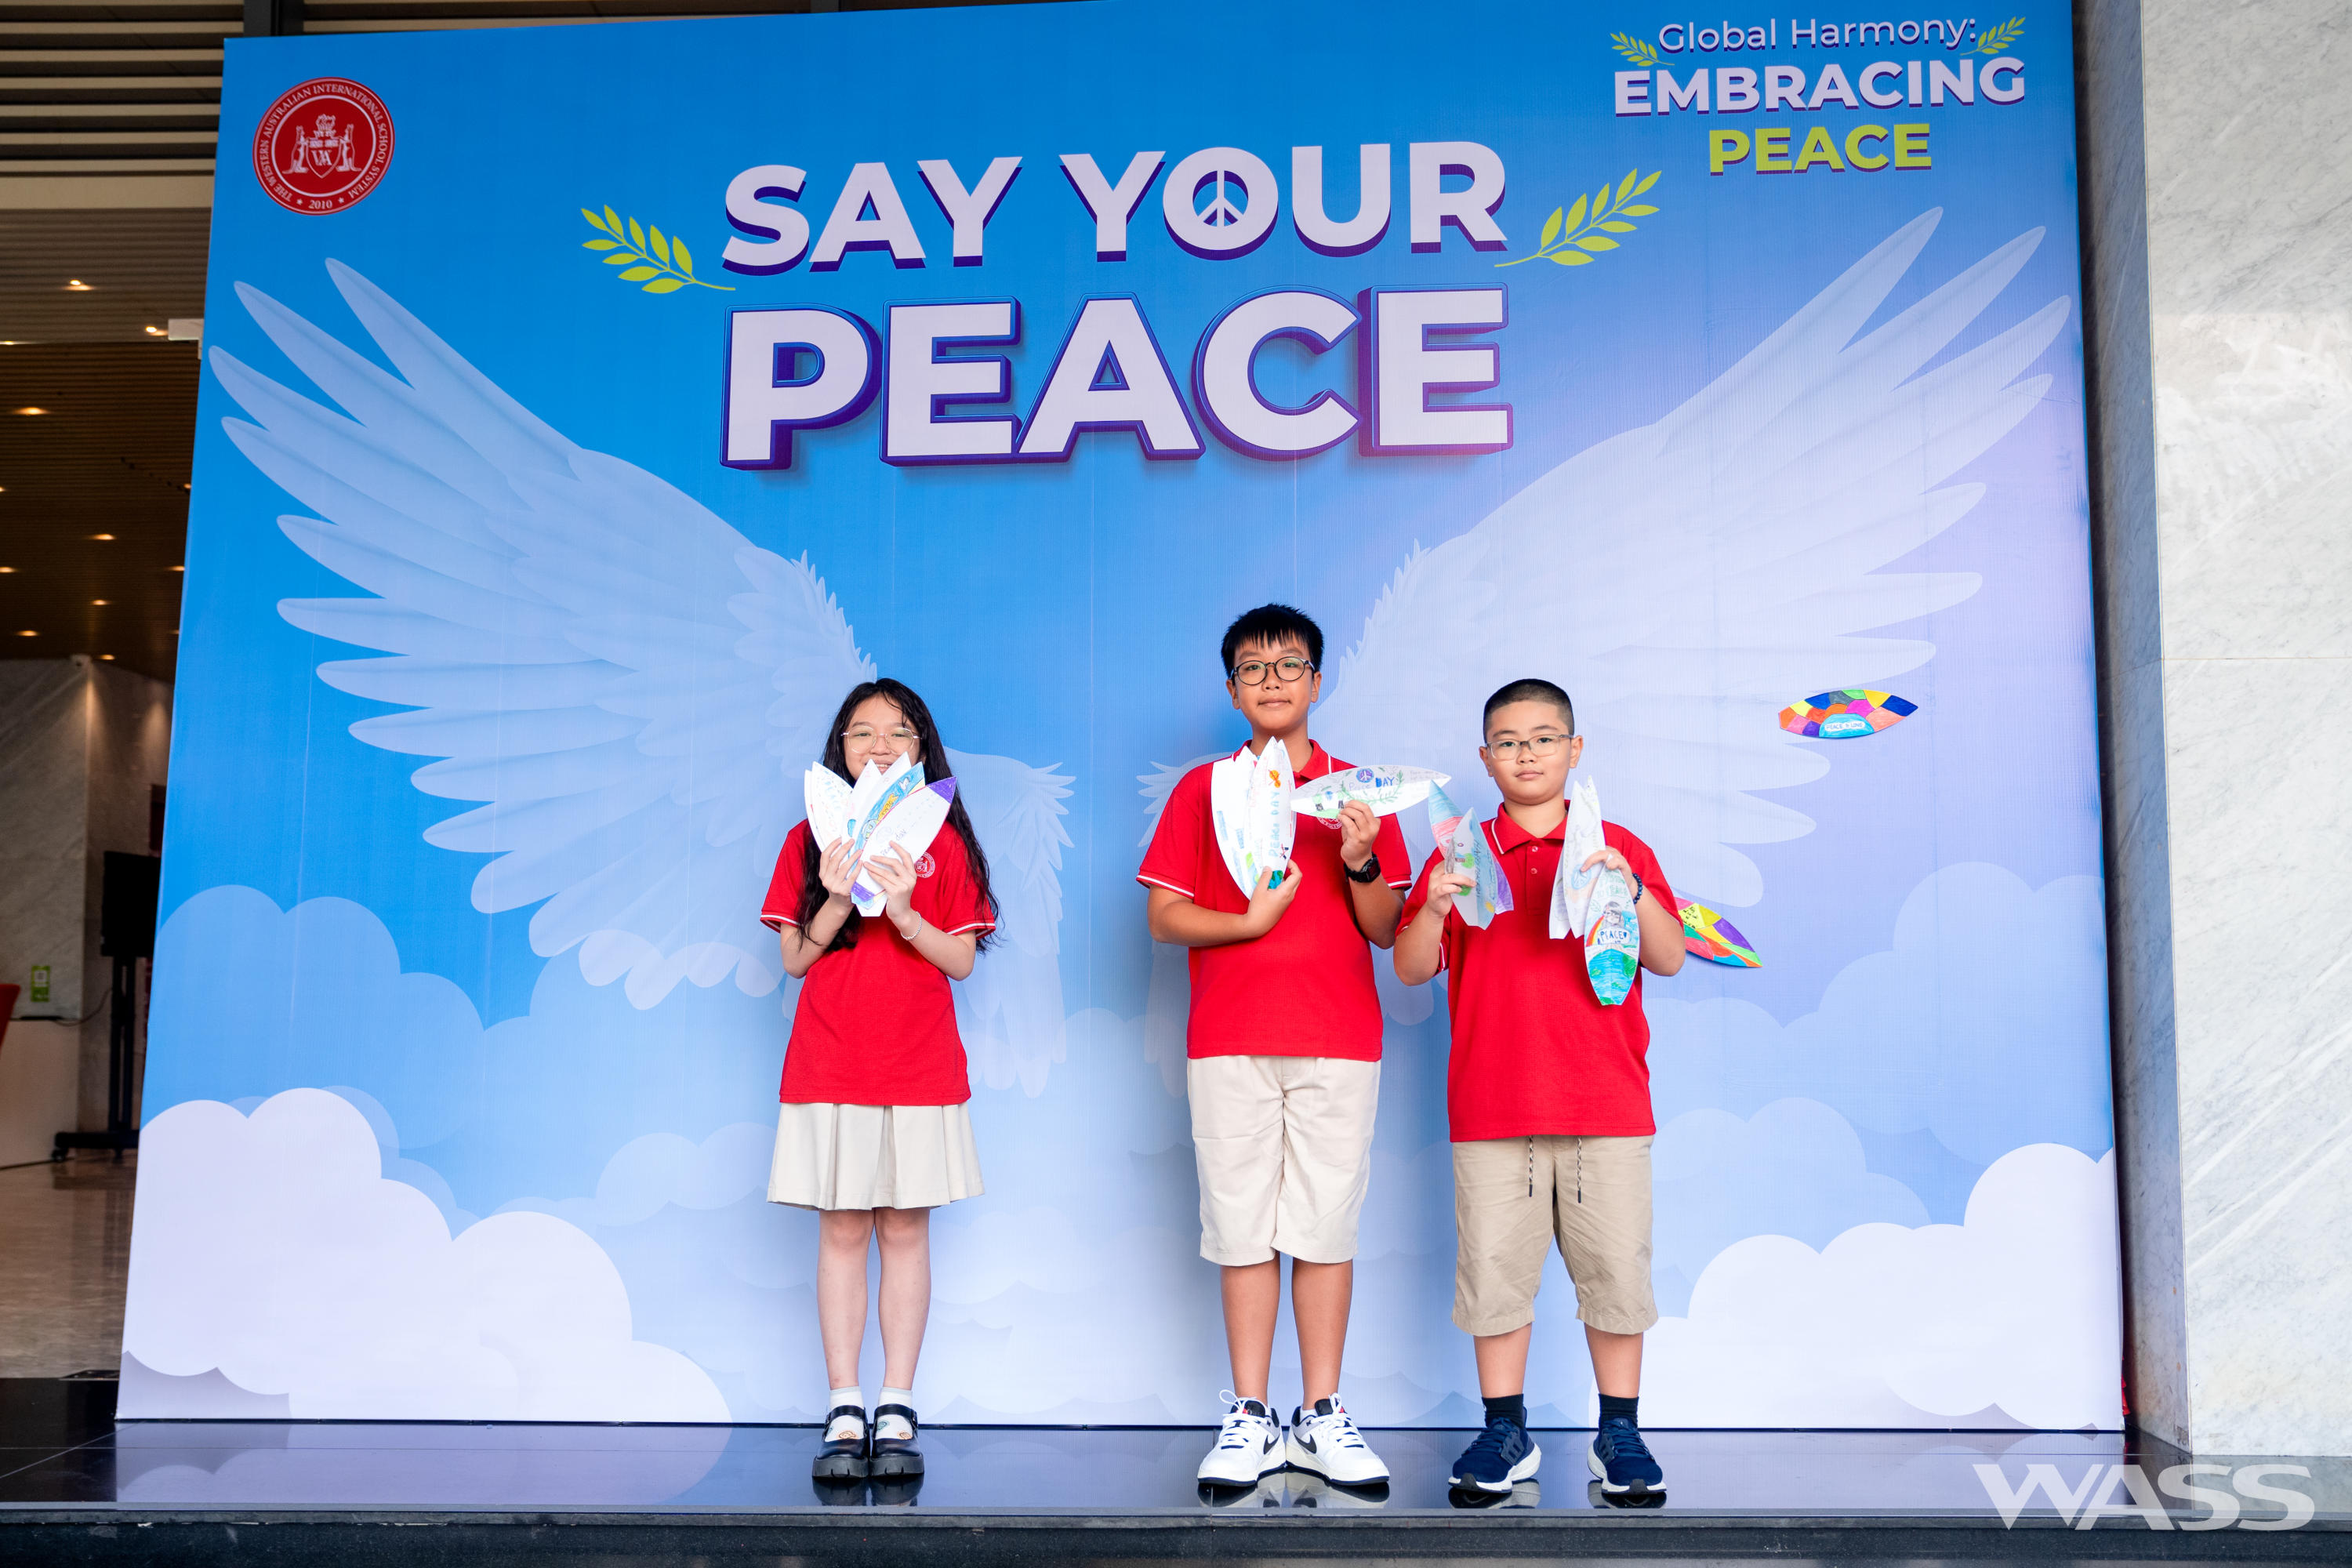 peace-day-2023-global-harmony-embracing-peace-10